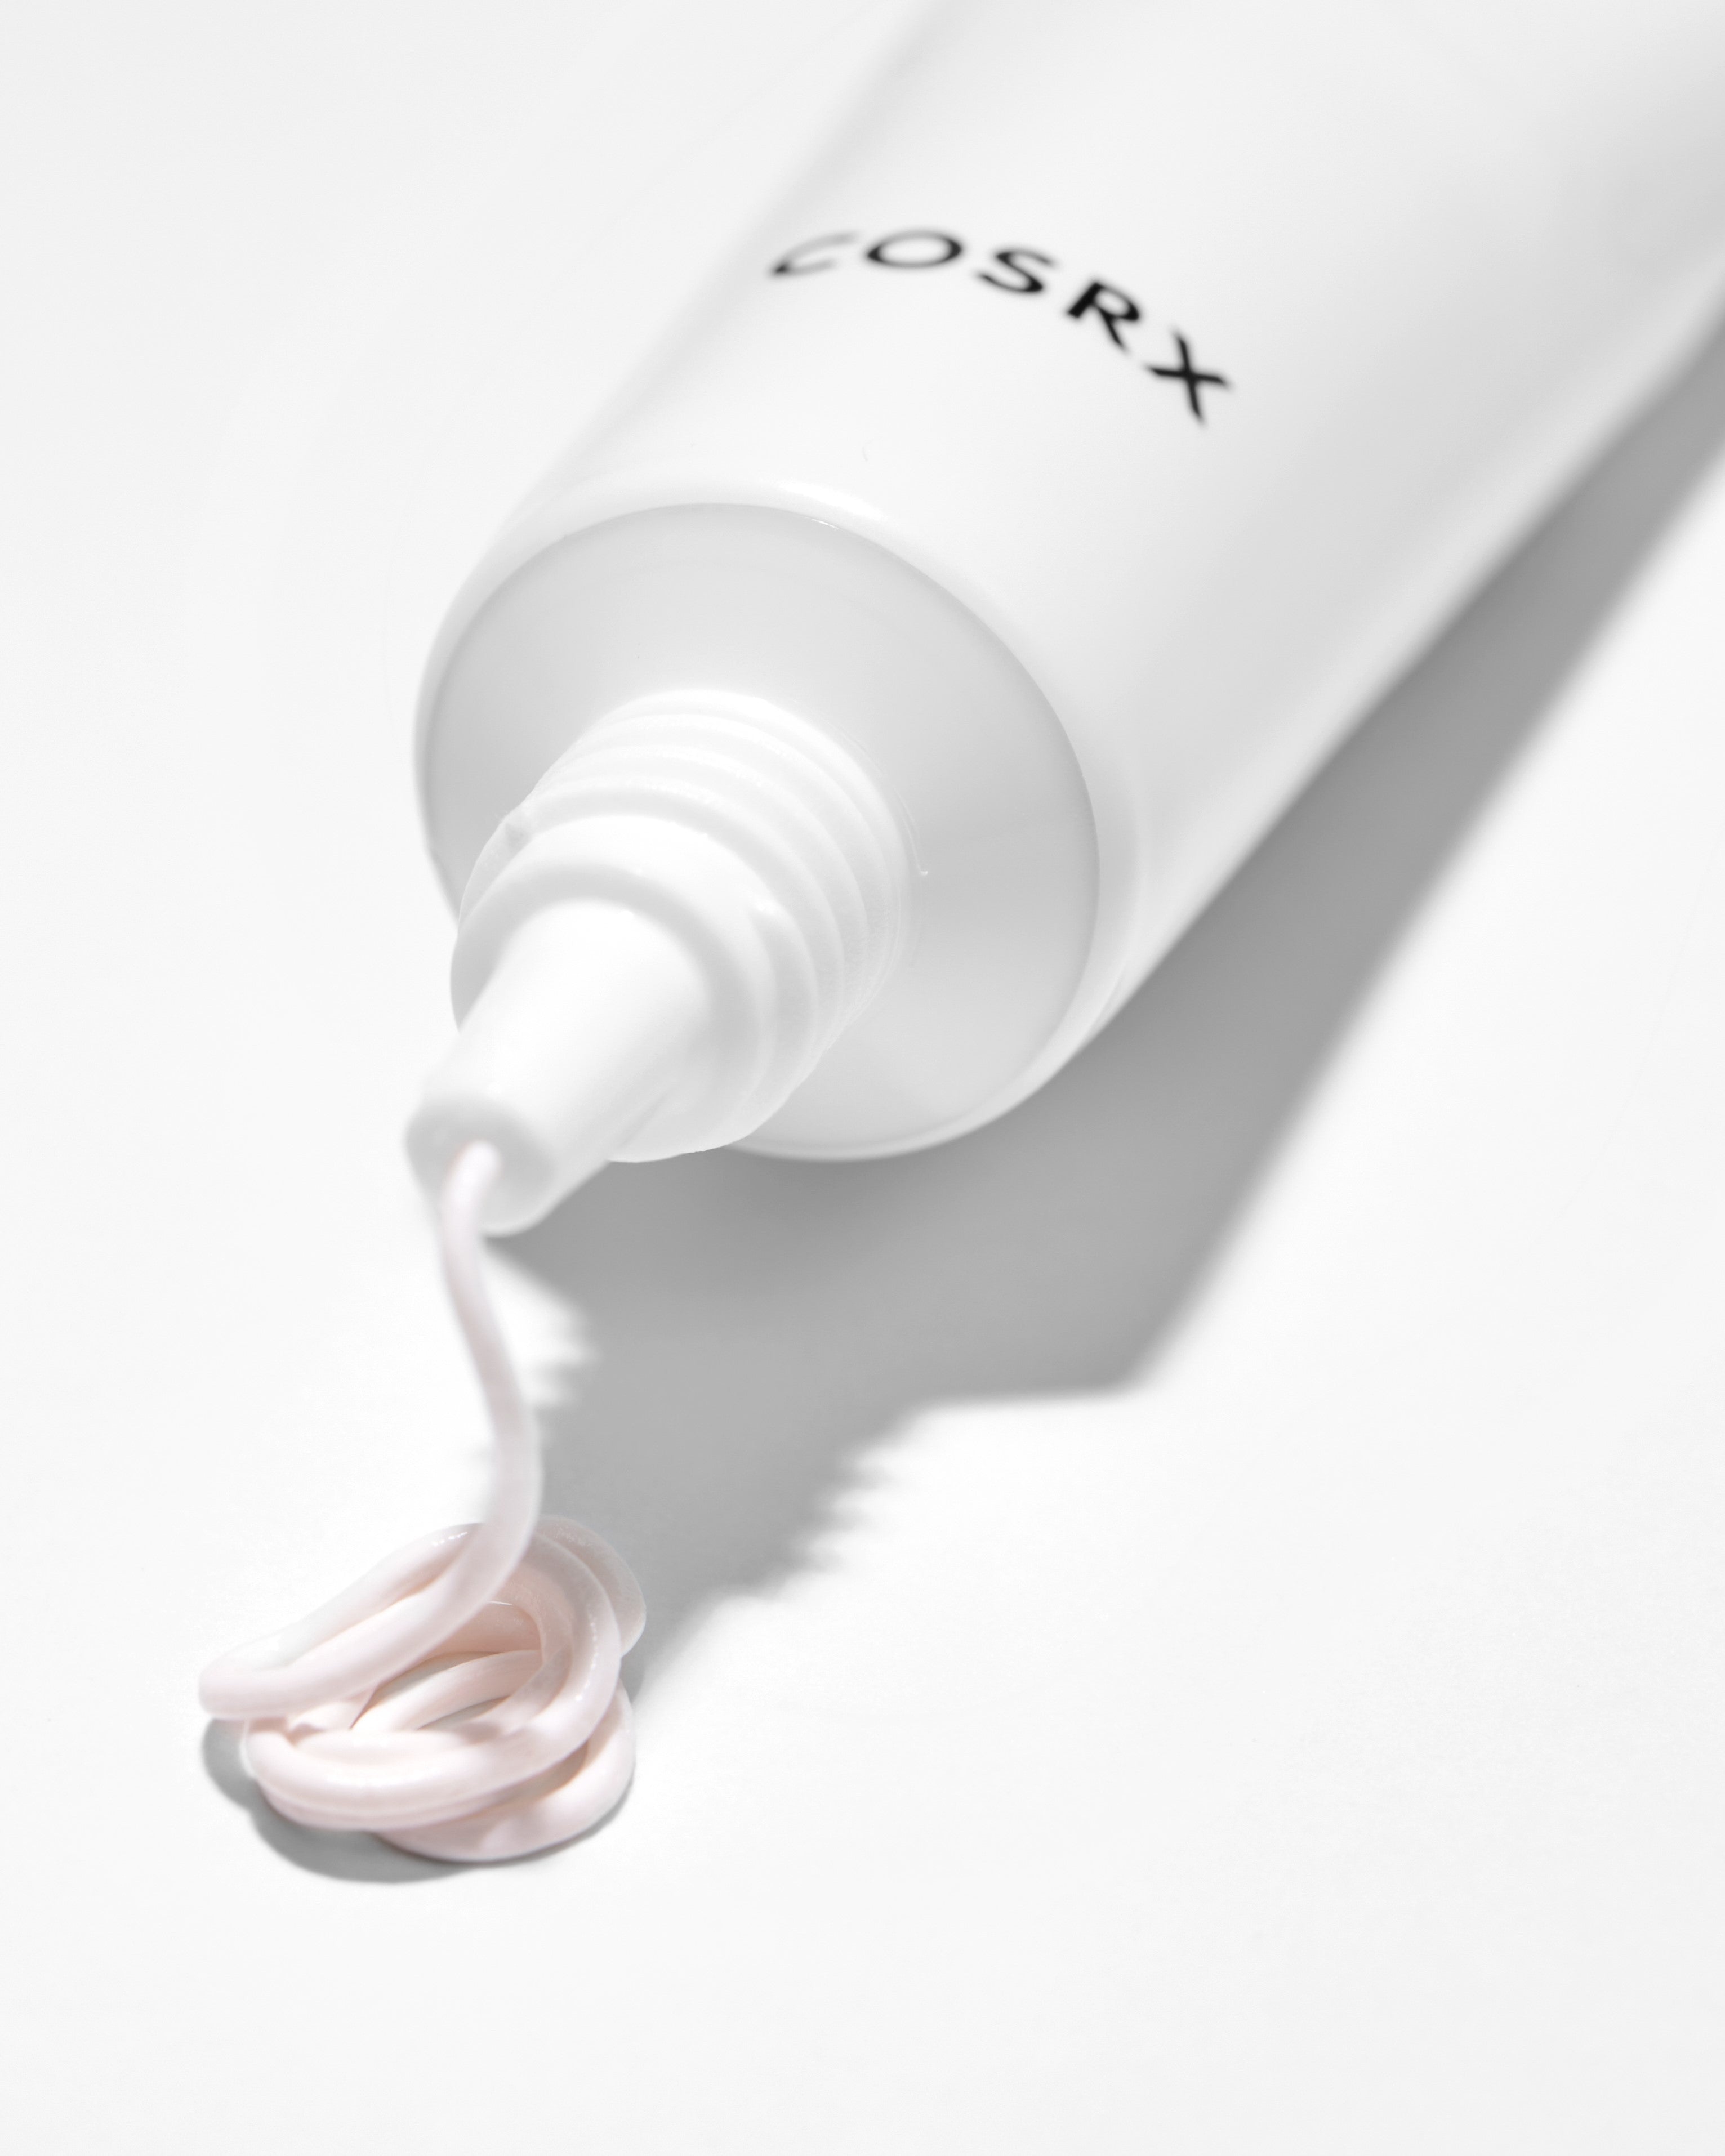 COSRX AC Collection Ultimate Spot Cream (30g)